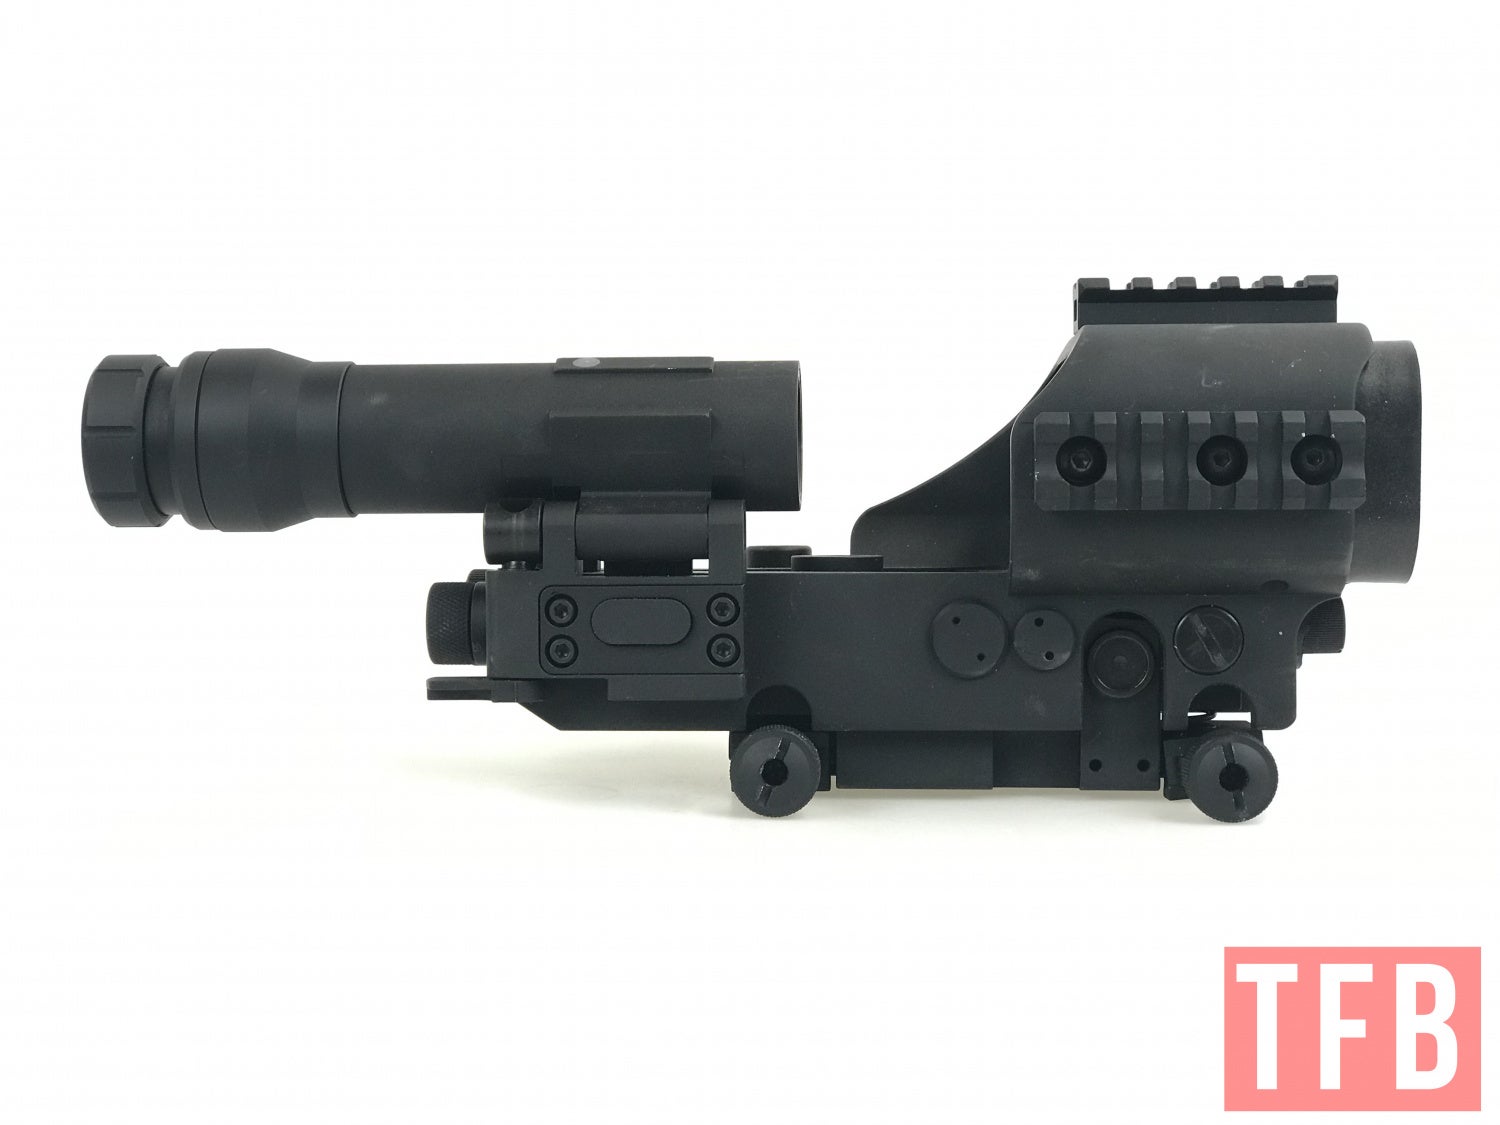 profile shot of the machine gun optic